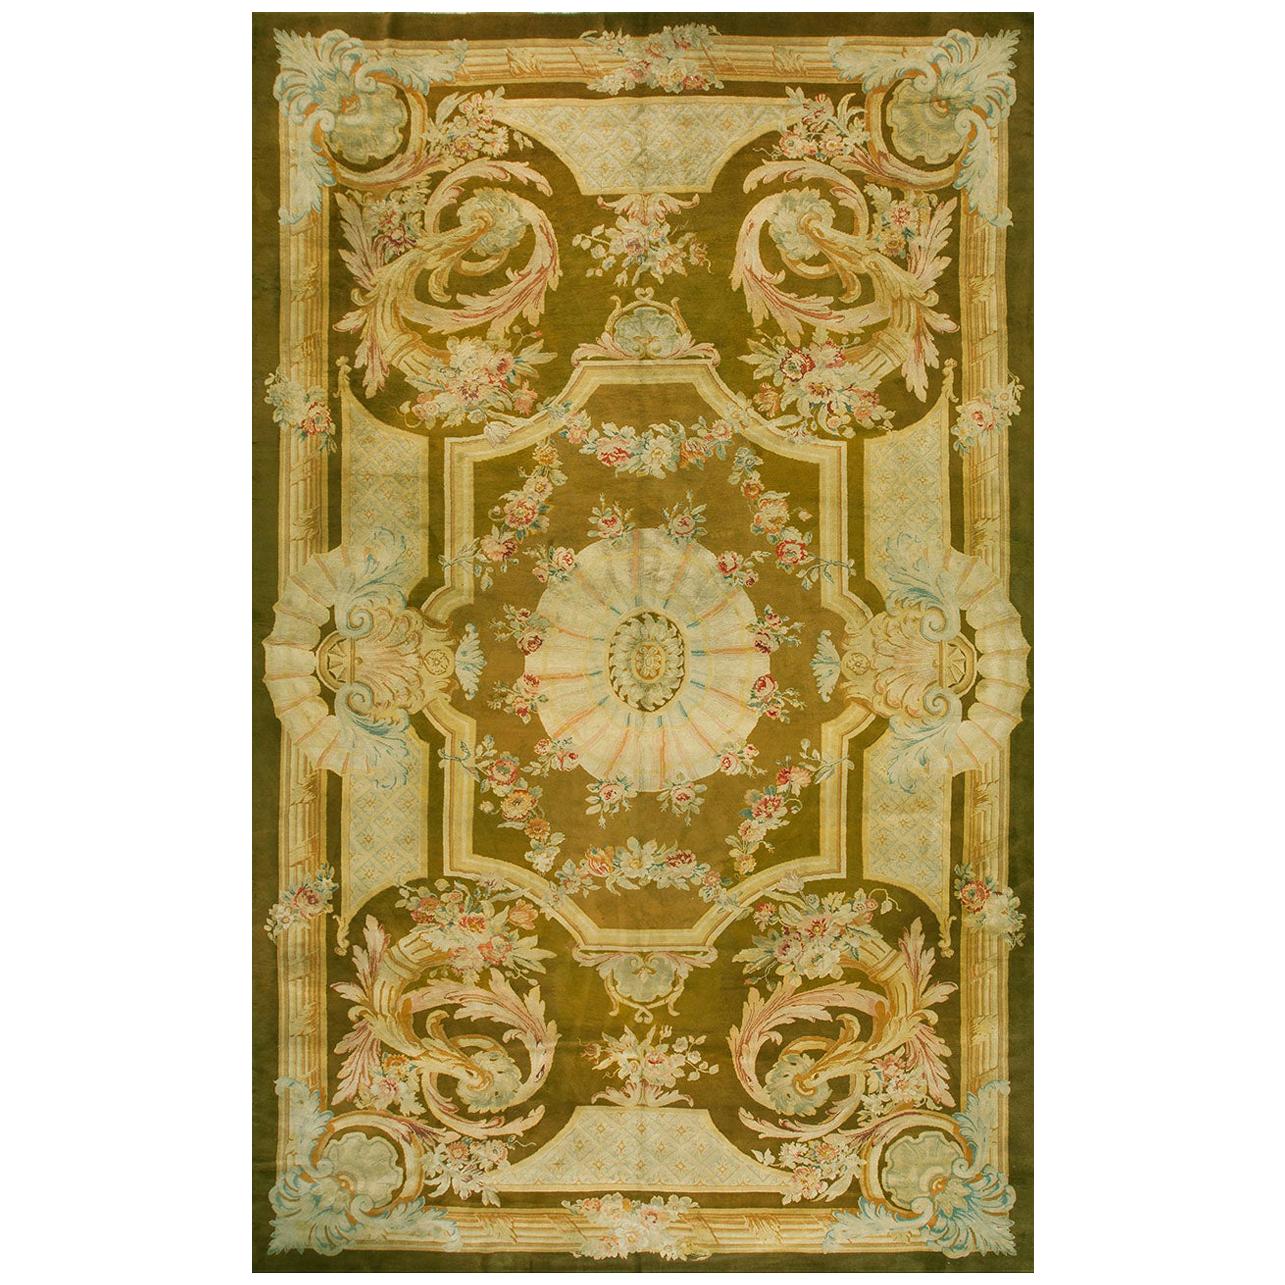 Mid 19th Century French Savonnerie Carpet ( 11'9" x 19'6" - 358 x 595 )